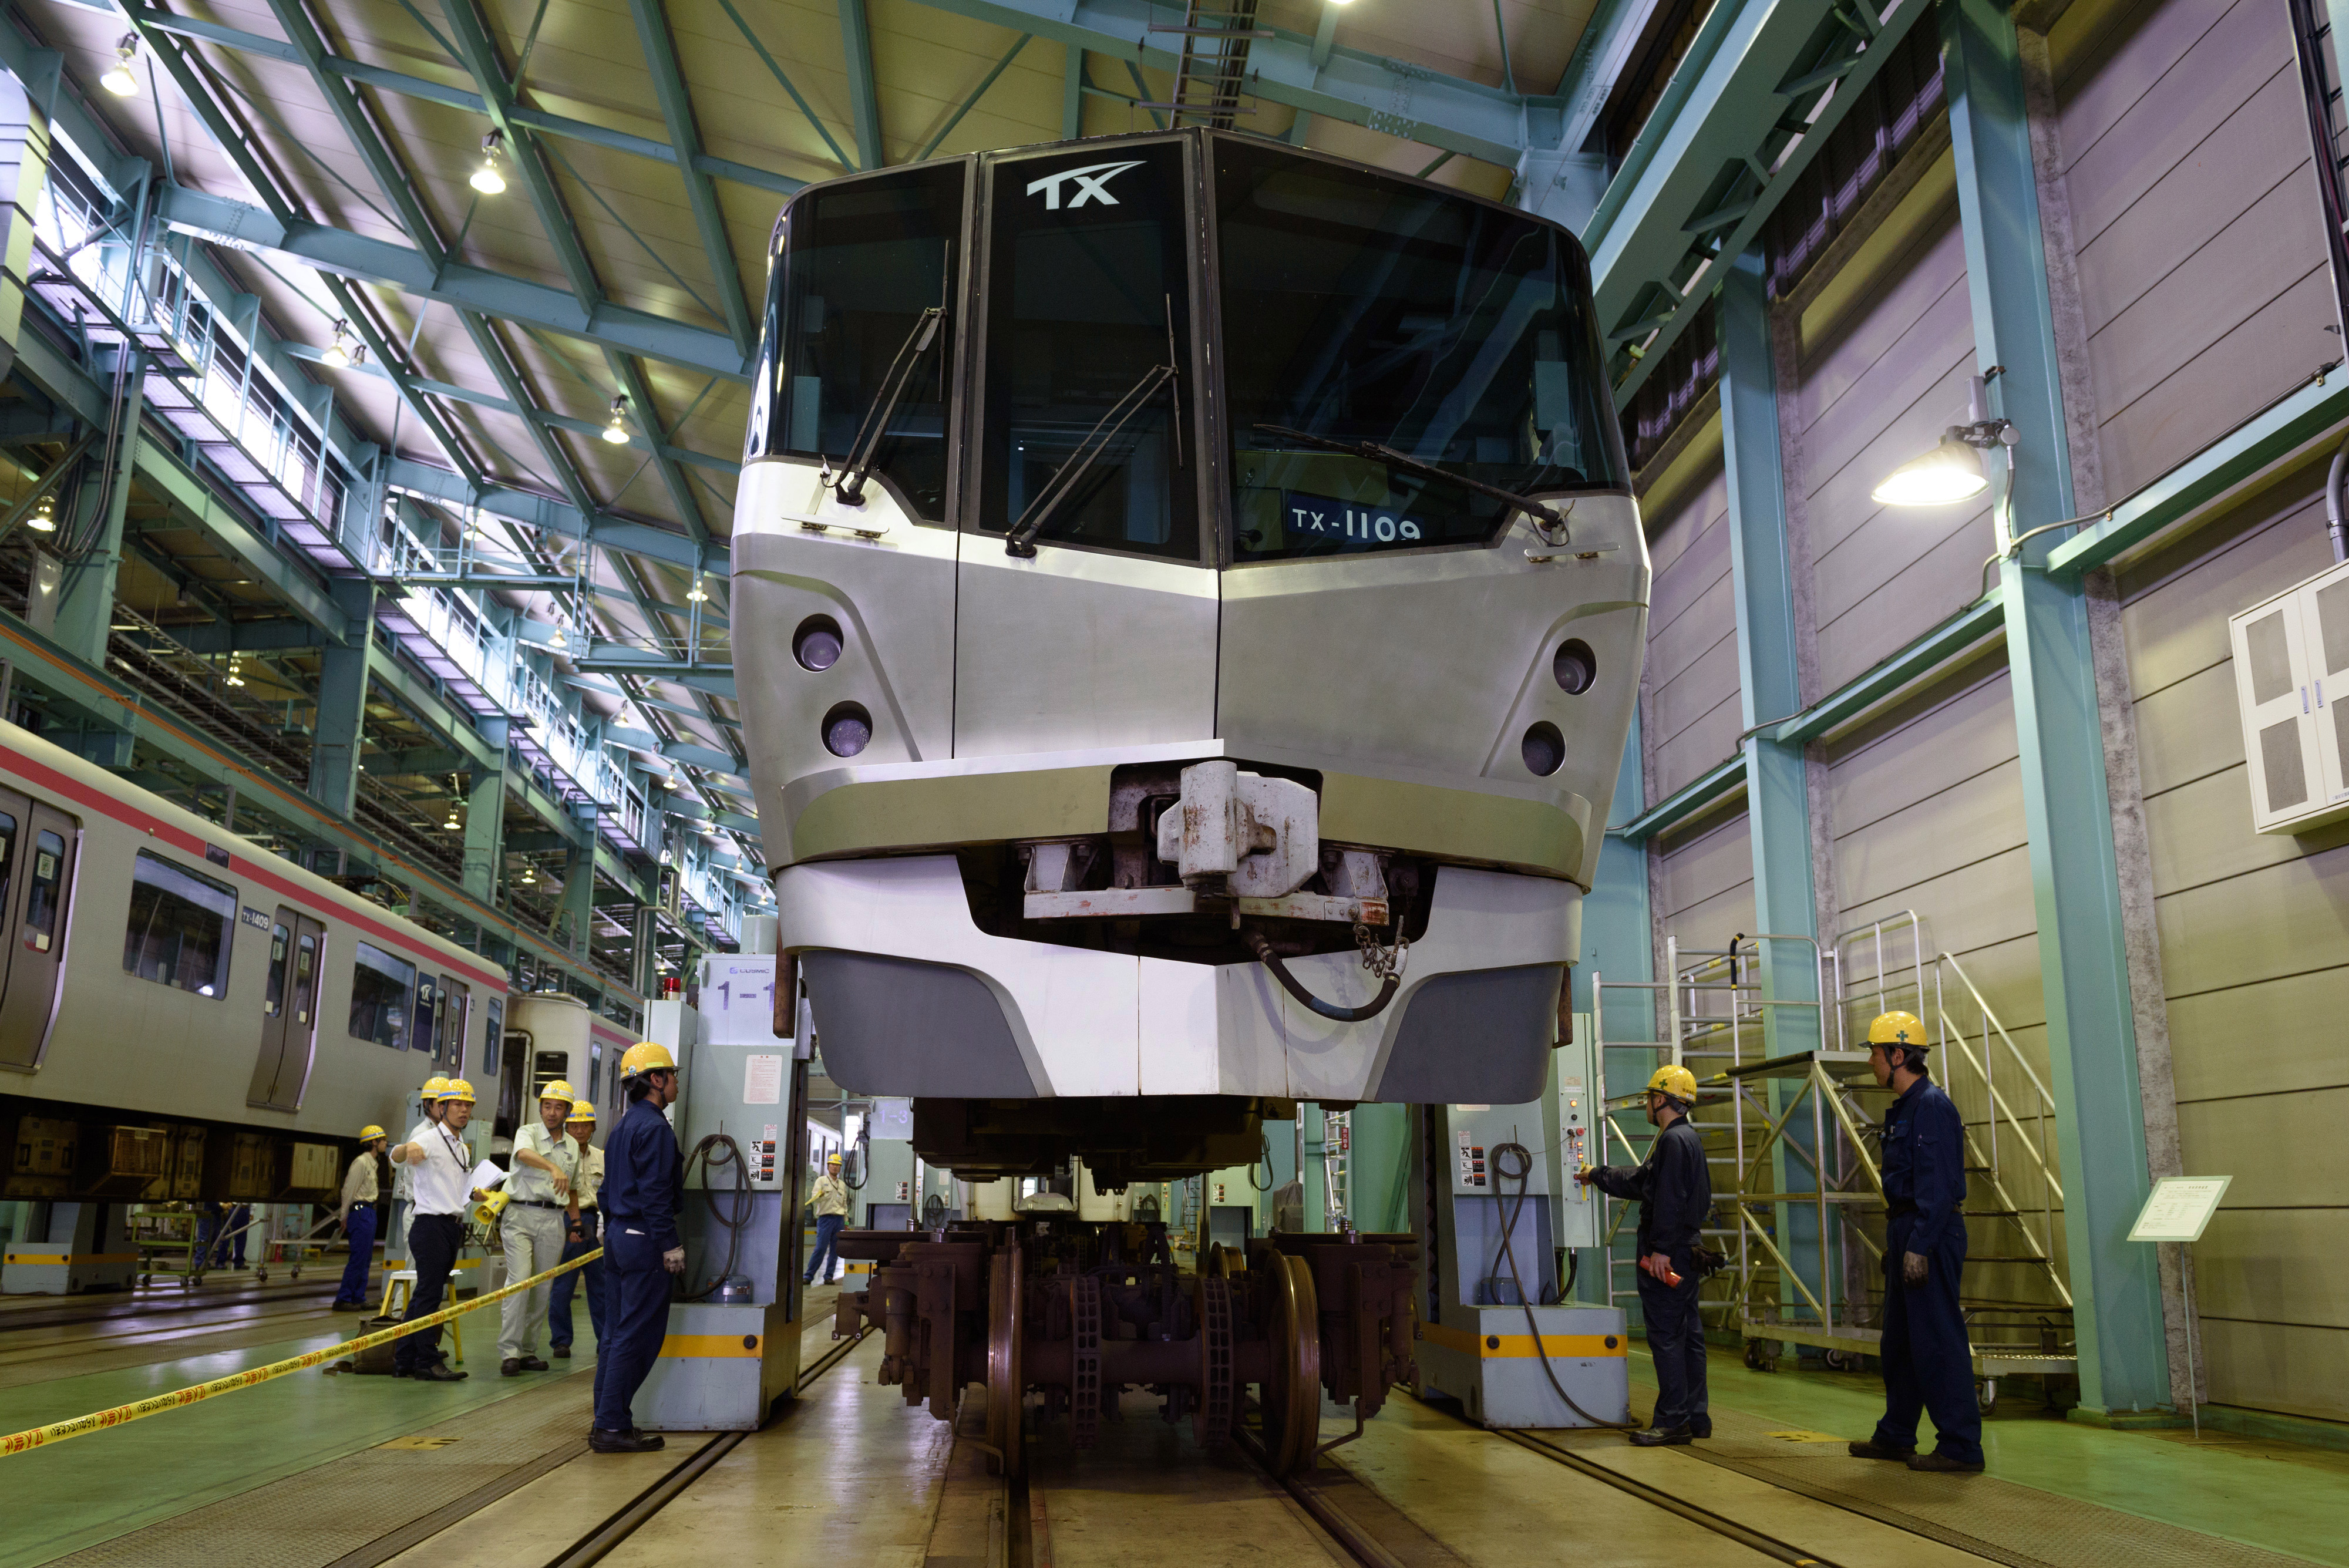 A Tsukuba Express TX-1000 series train (Bloomberg&mdash;Bloomberg via Getty Images)